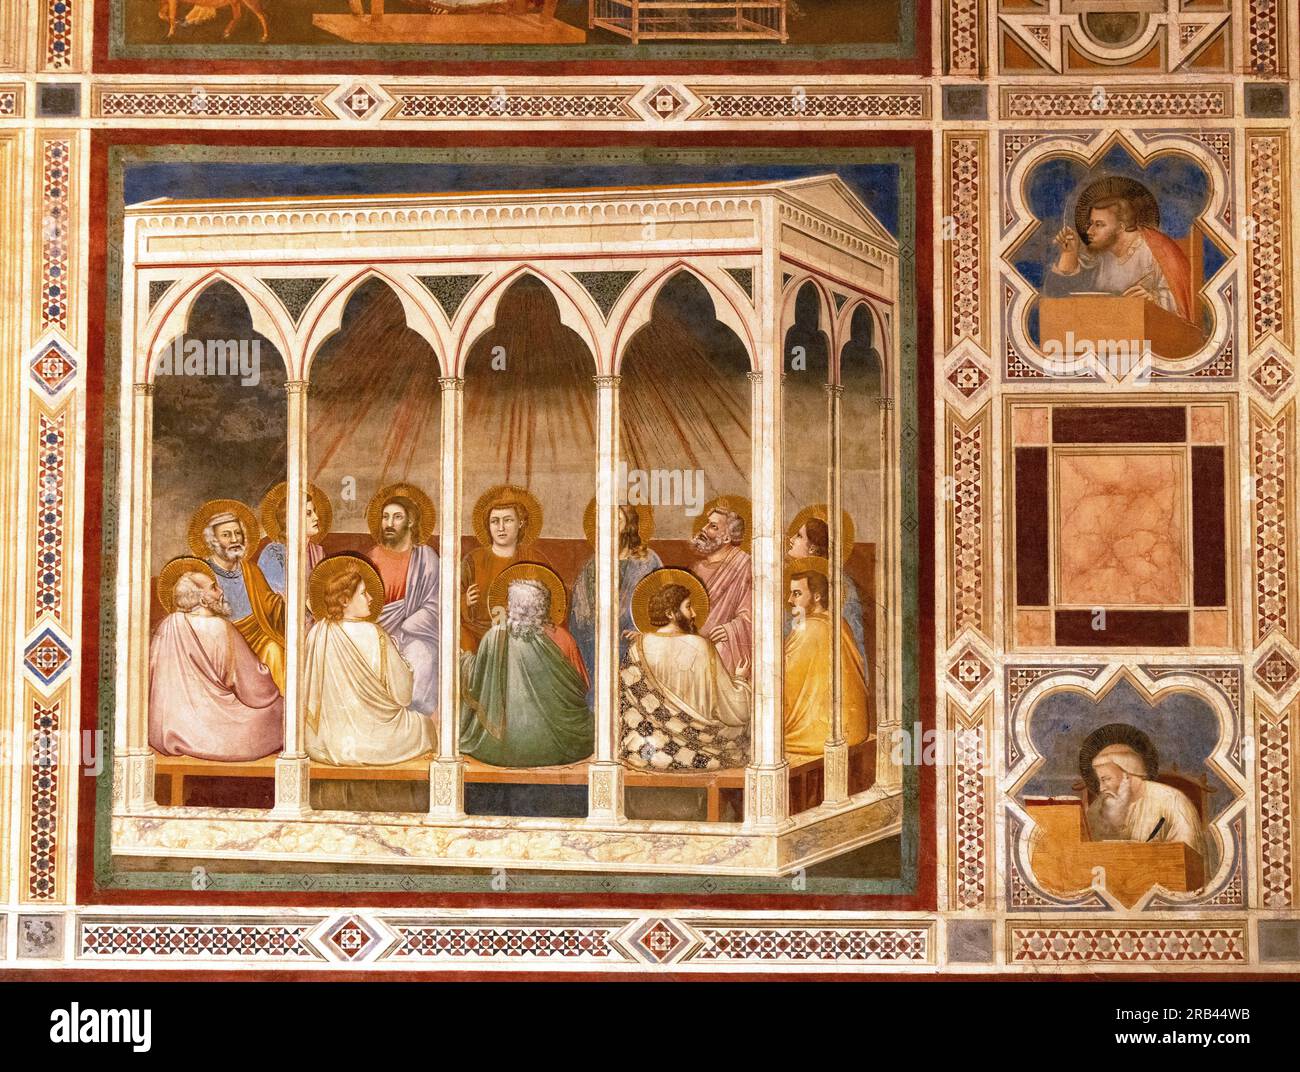 Giotto-Fresken, die Scrovegni-Kapelle, Padua - italienische Renaissance-Gemälde des Lebens Christi aus dem 14. Jahrhundert; hier „Pentecost“; Padua Italien Stockfoto